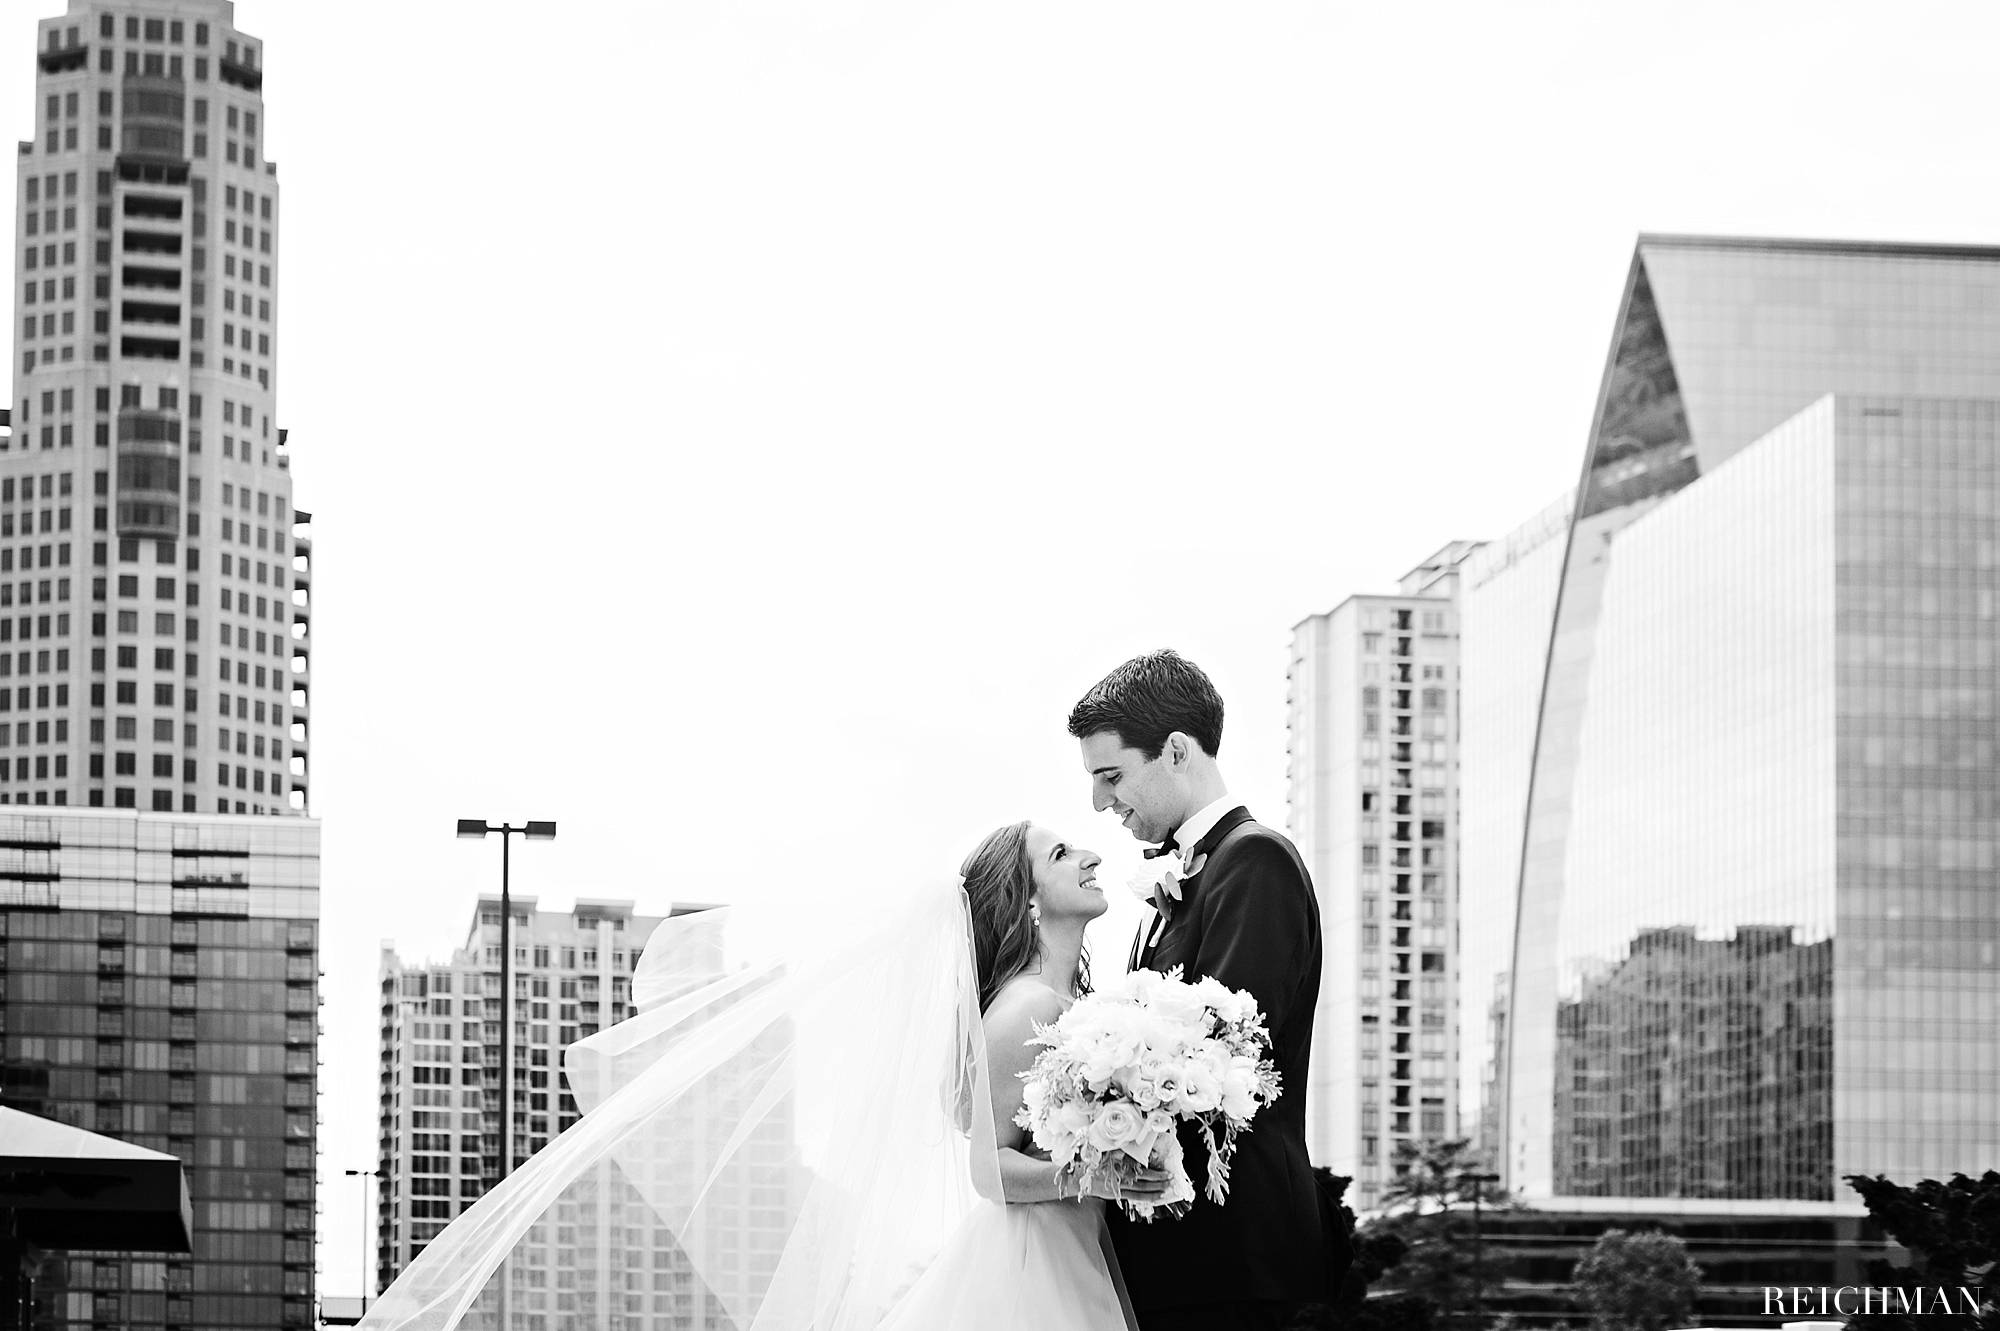 Buckhead skyline with bride and groom